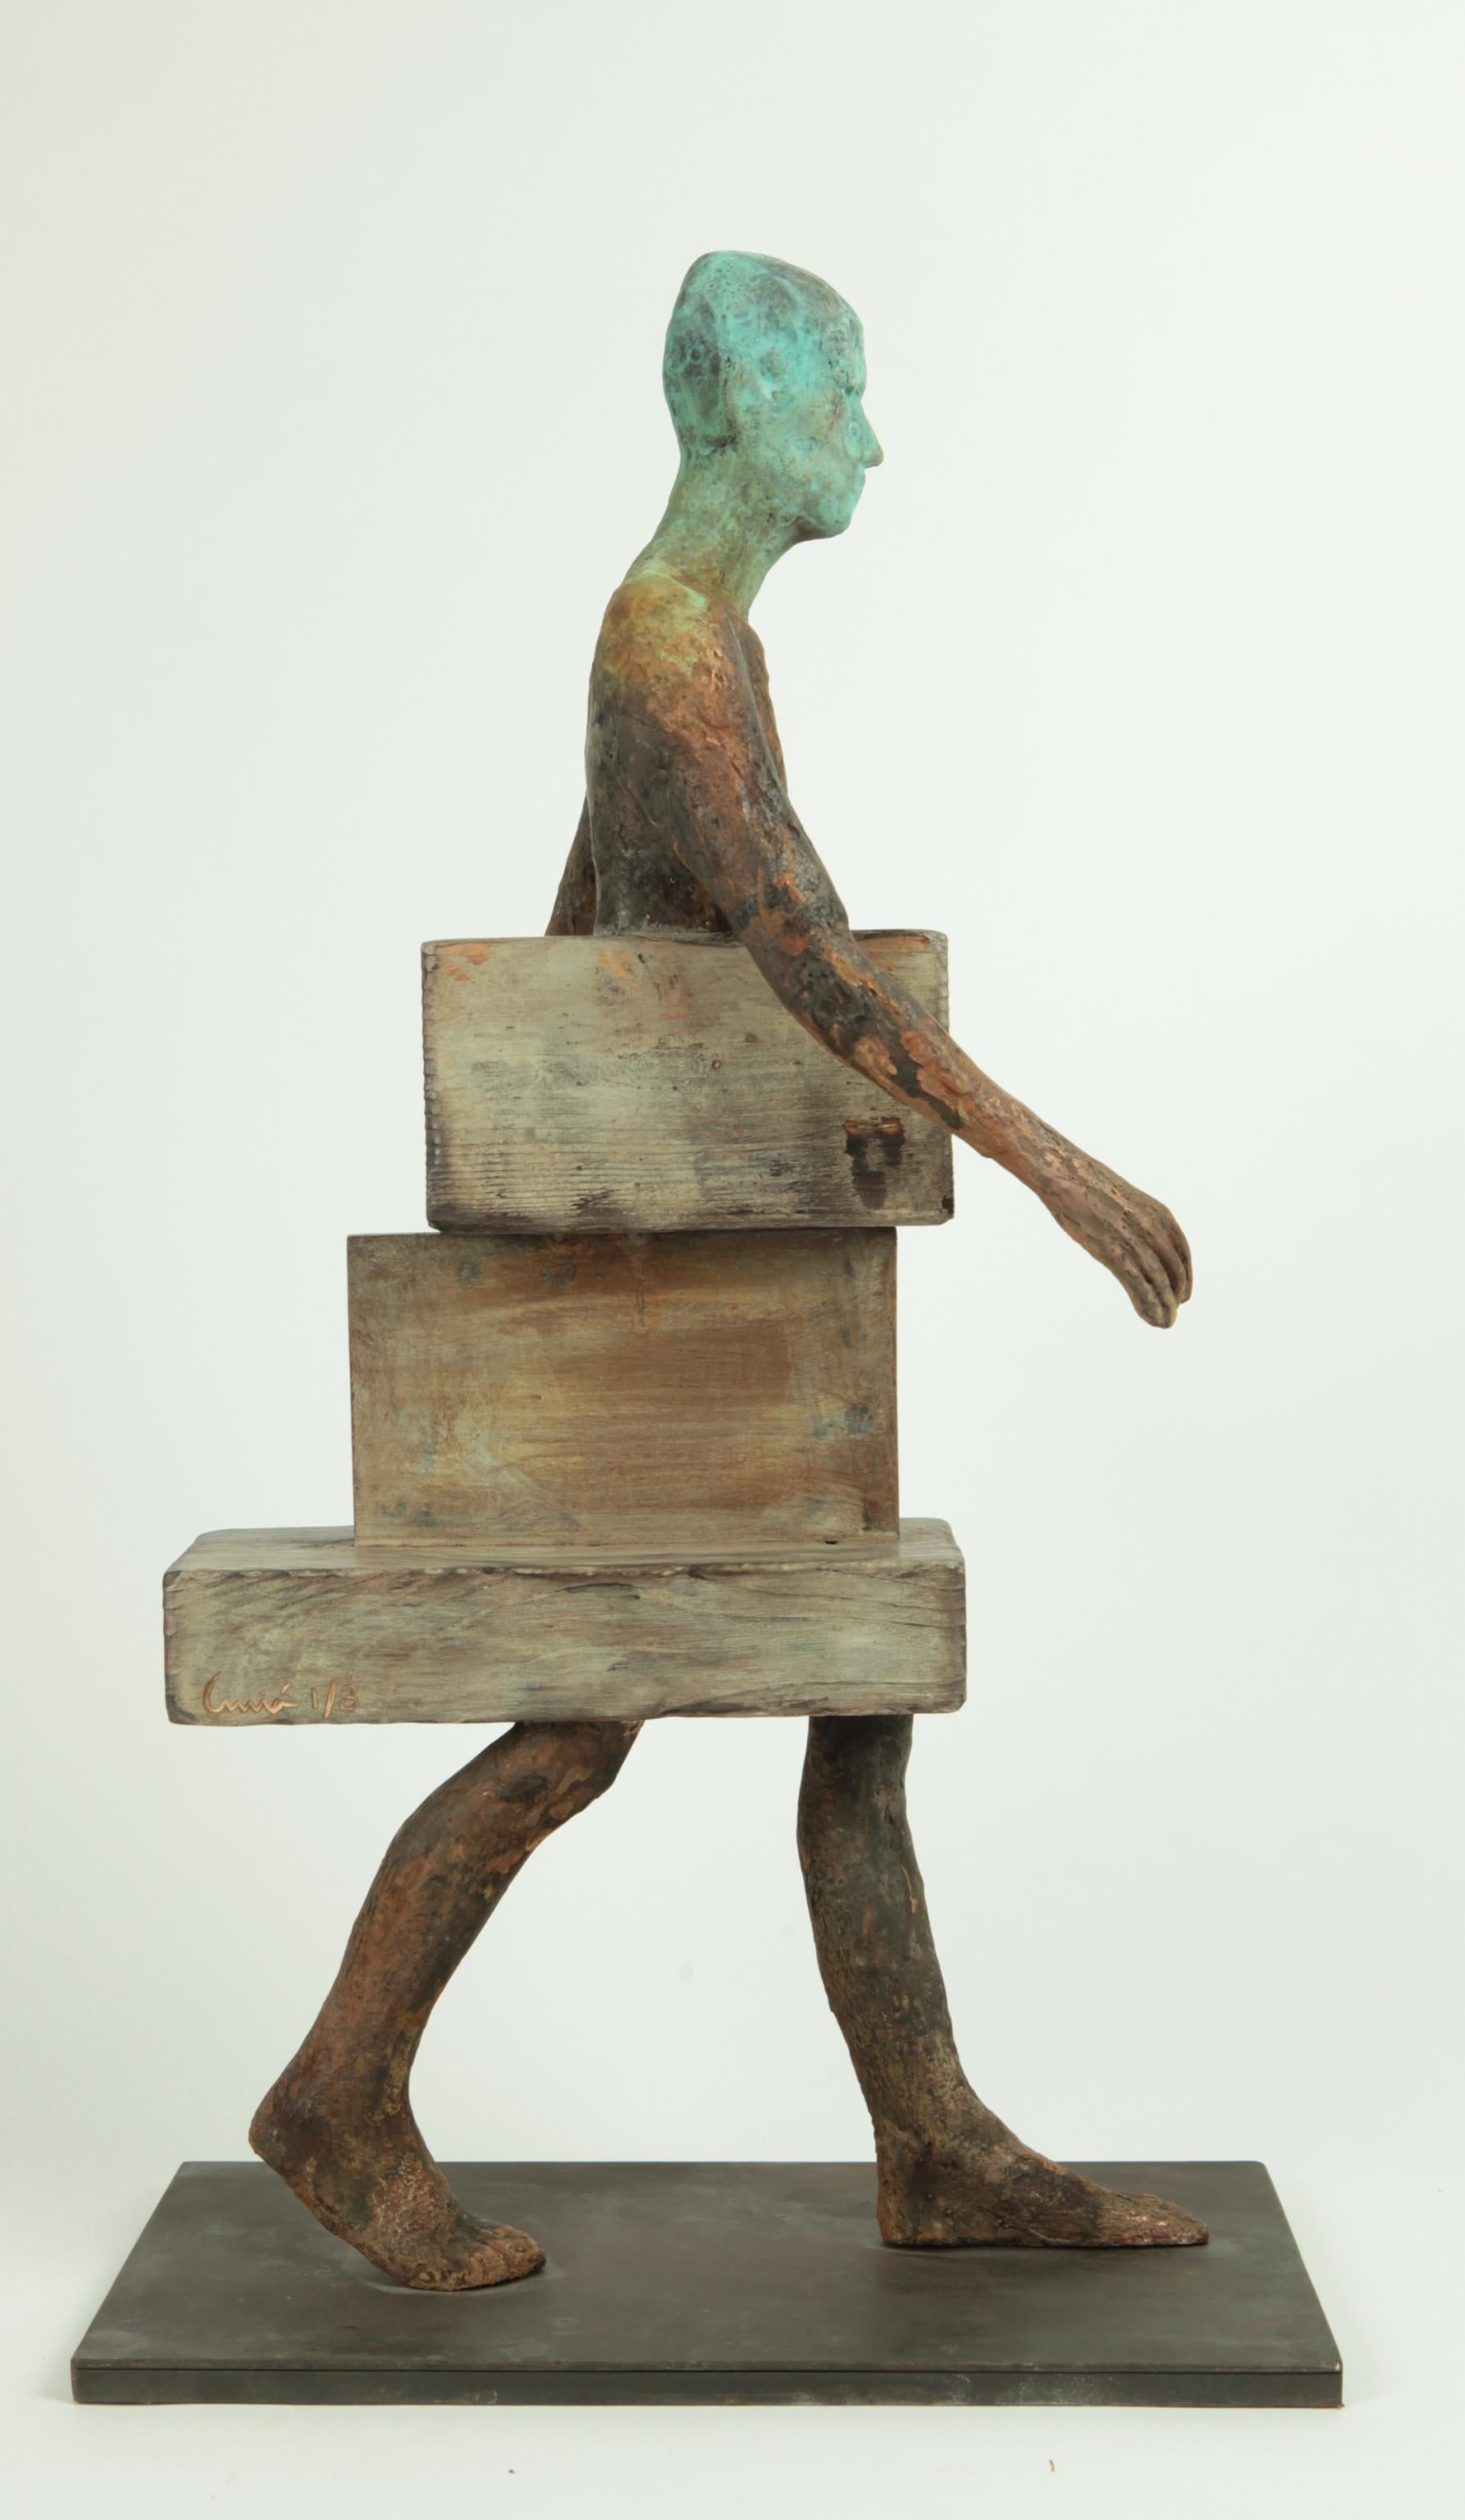 Uncamino - Sculpture by Jesus Curia Perez